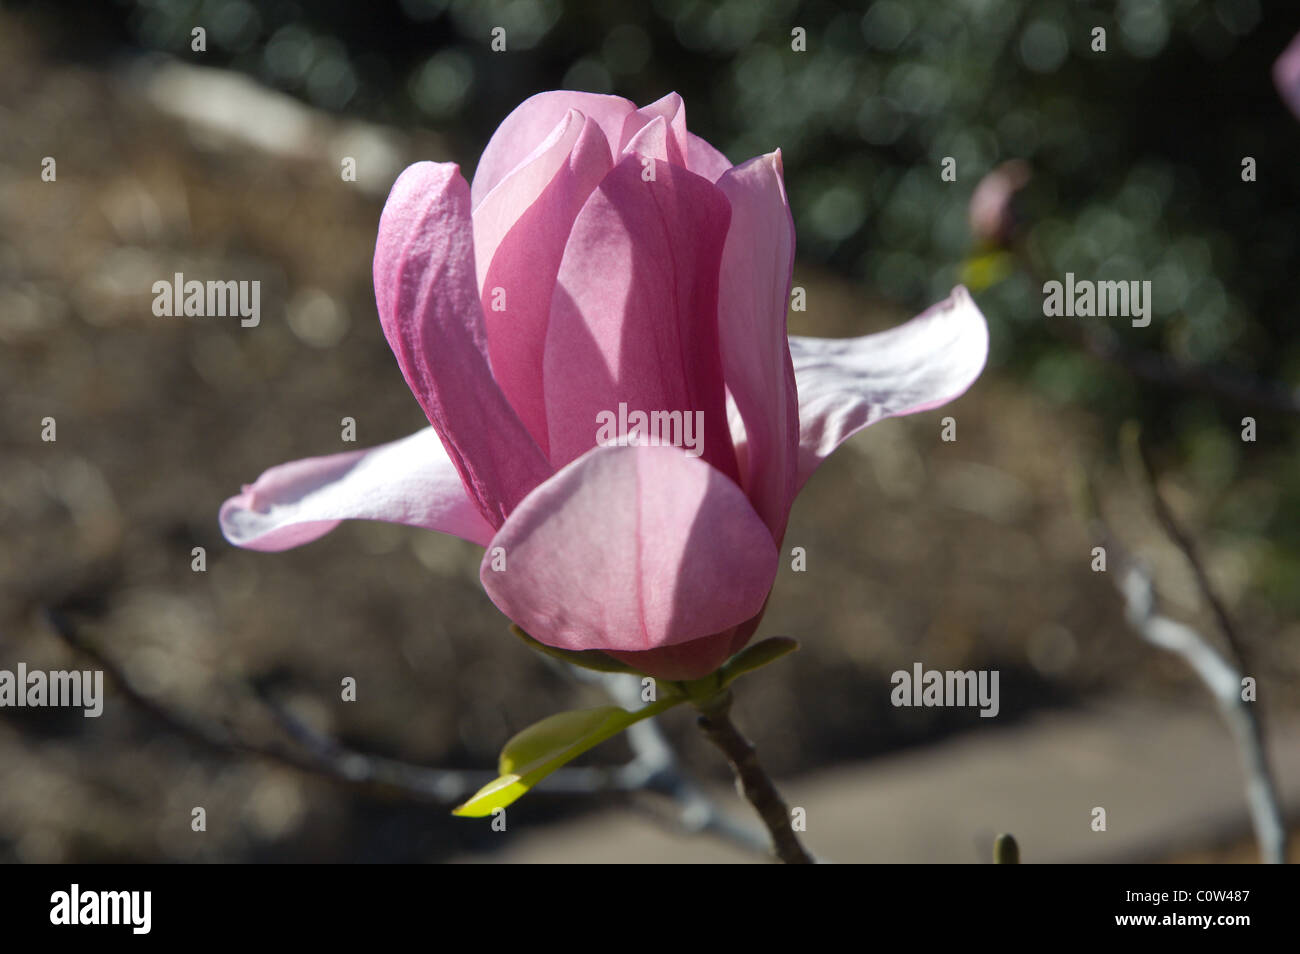 Magnolia blossom at Raulston Arboretum, Raleigh NC USA Stock Photo